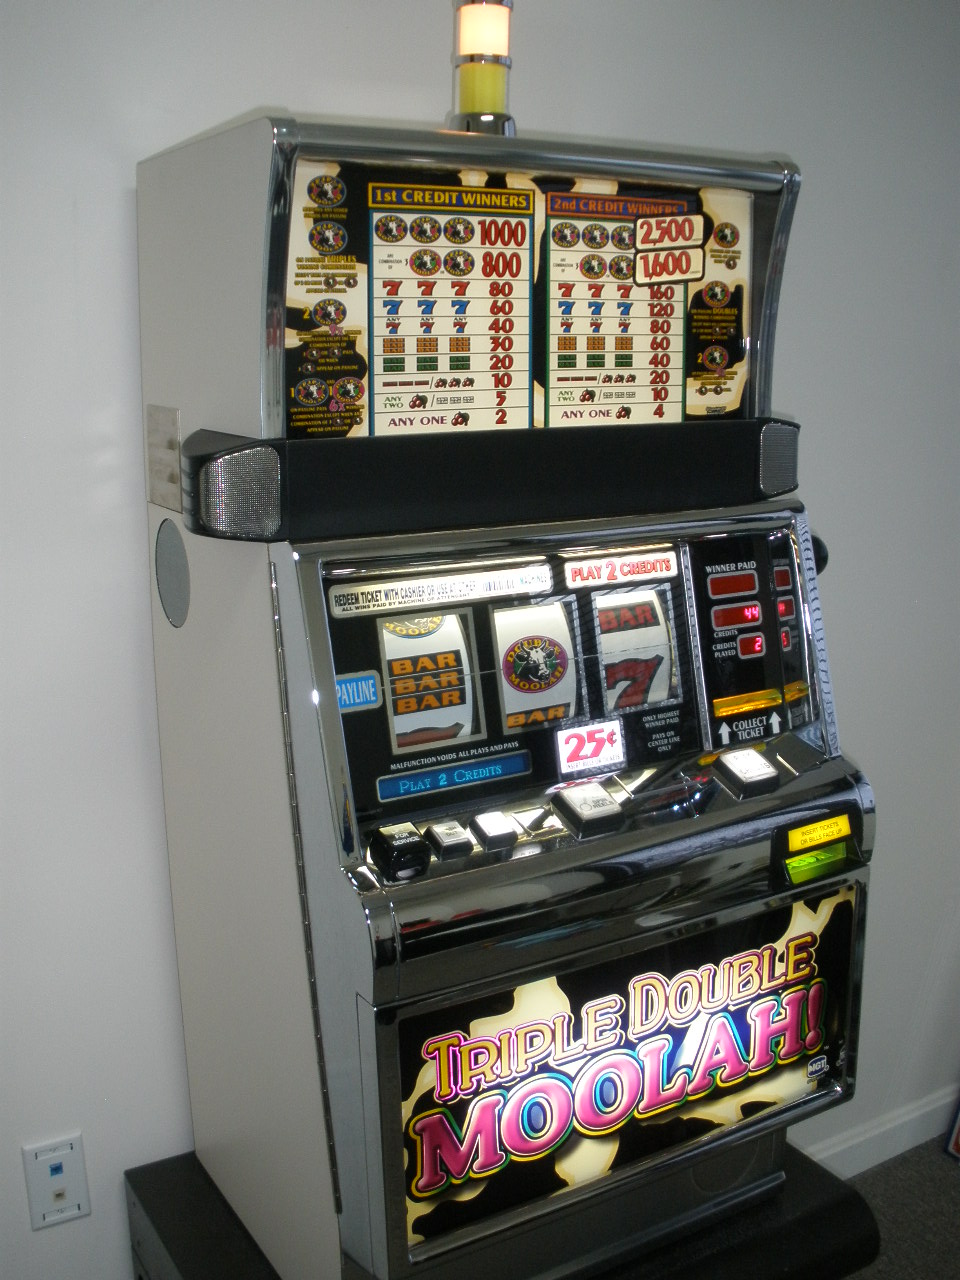 money moolah slot machine